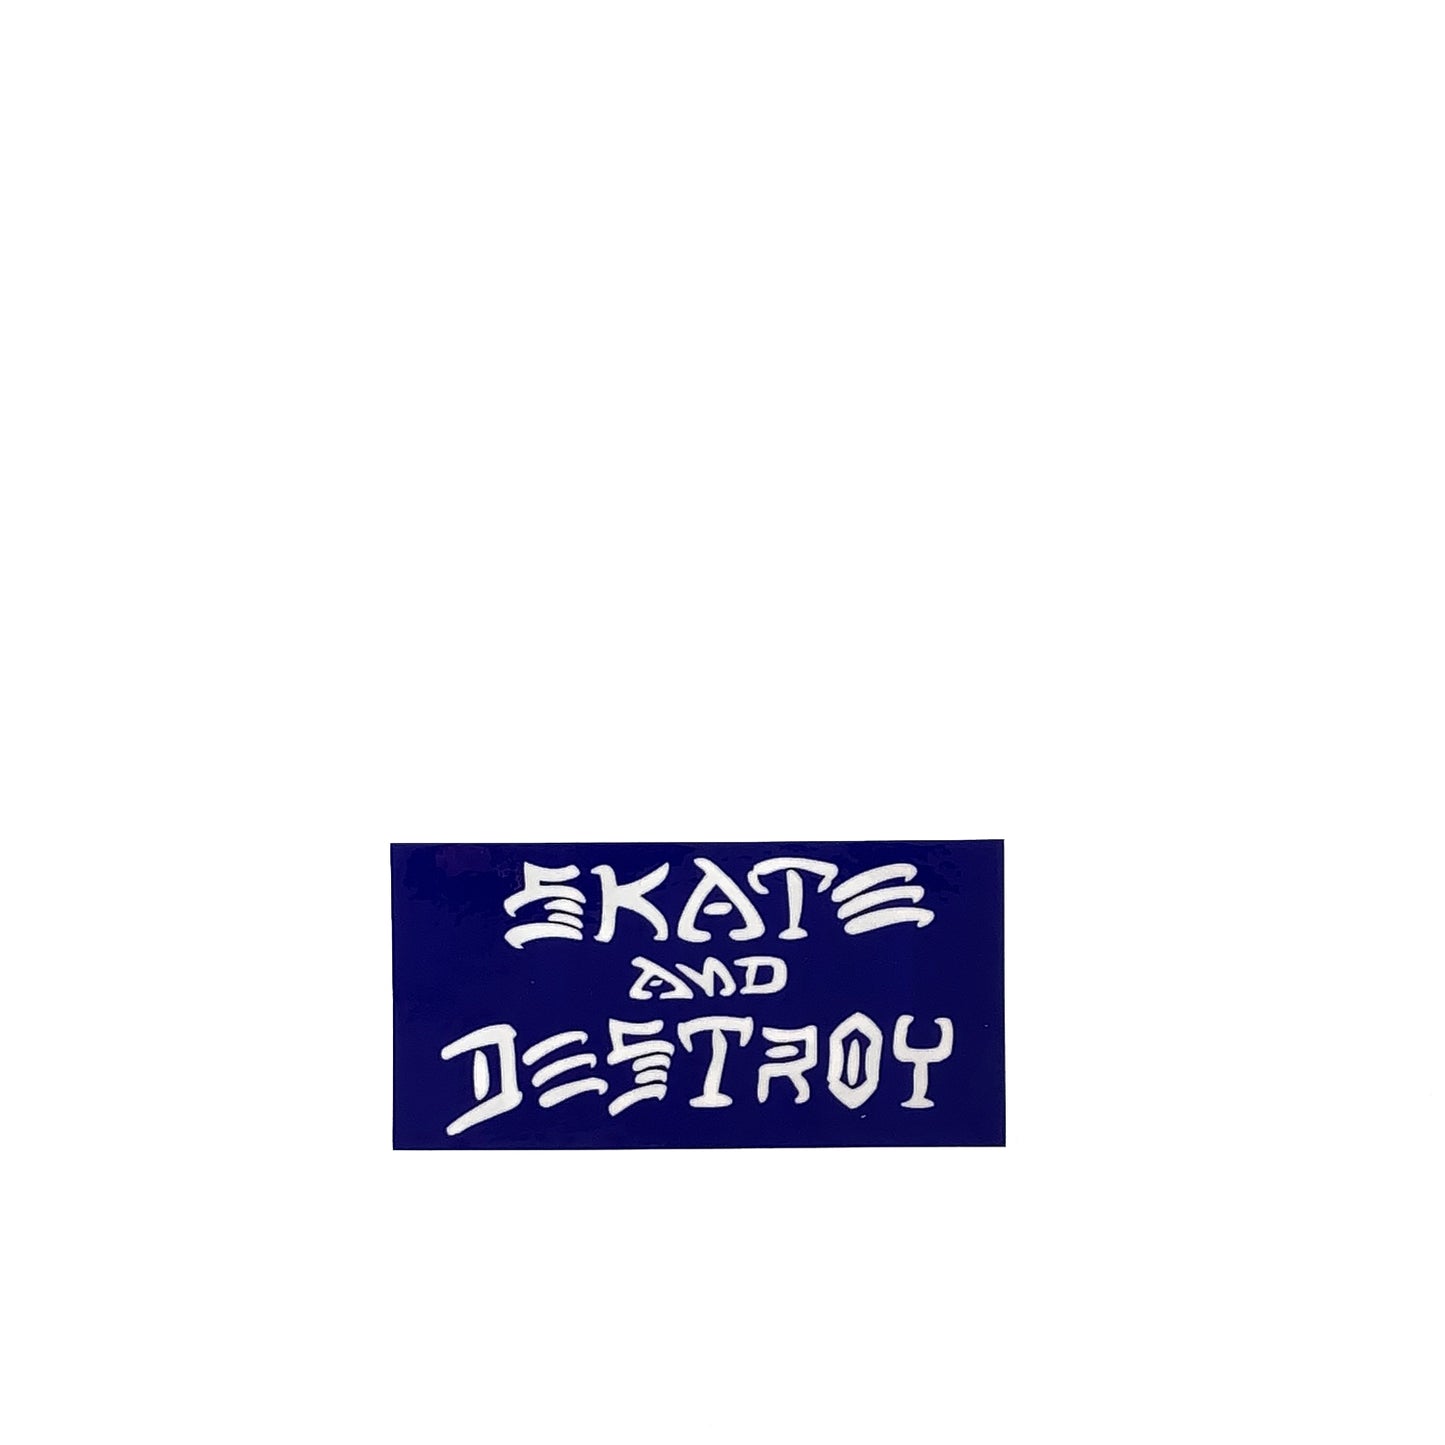 Thrasher Skate and Destroy Sticker - Blue / White - Prime Delux Store